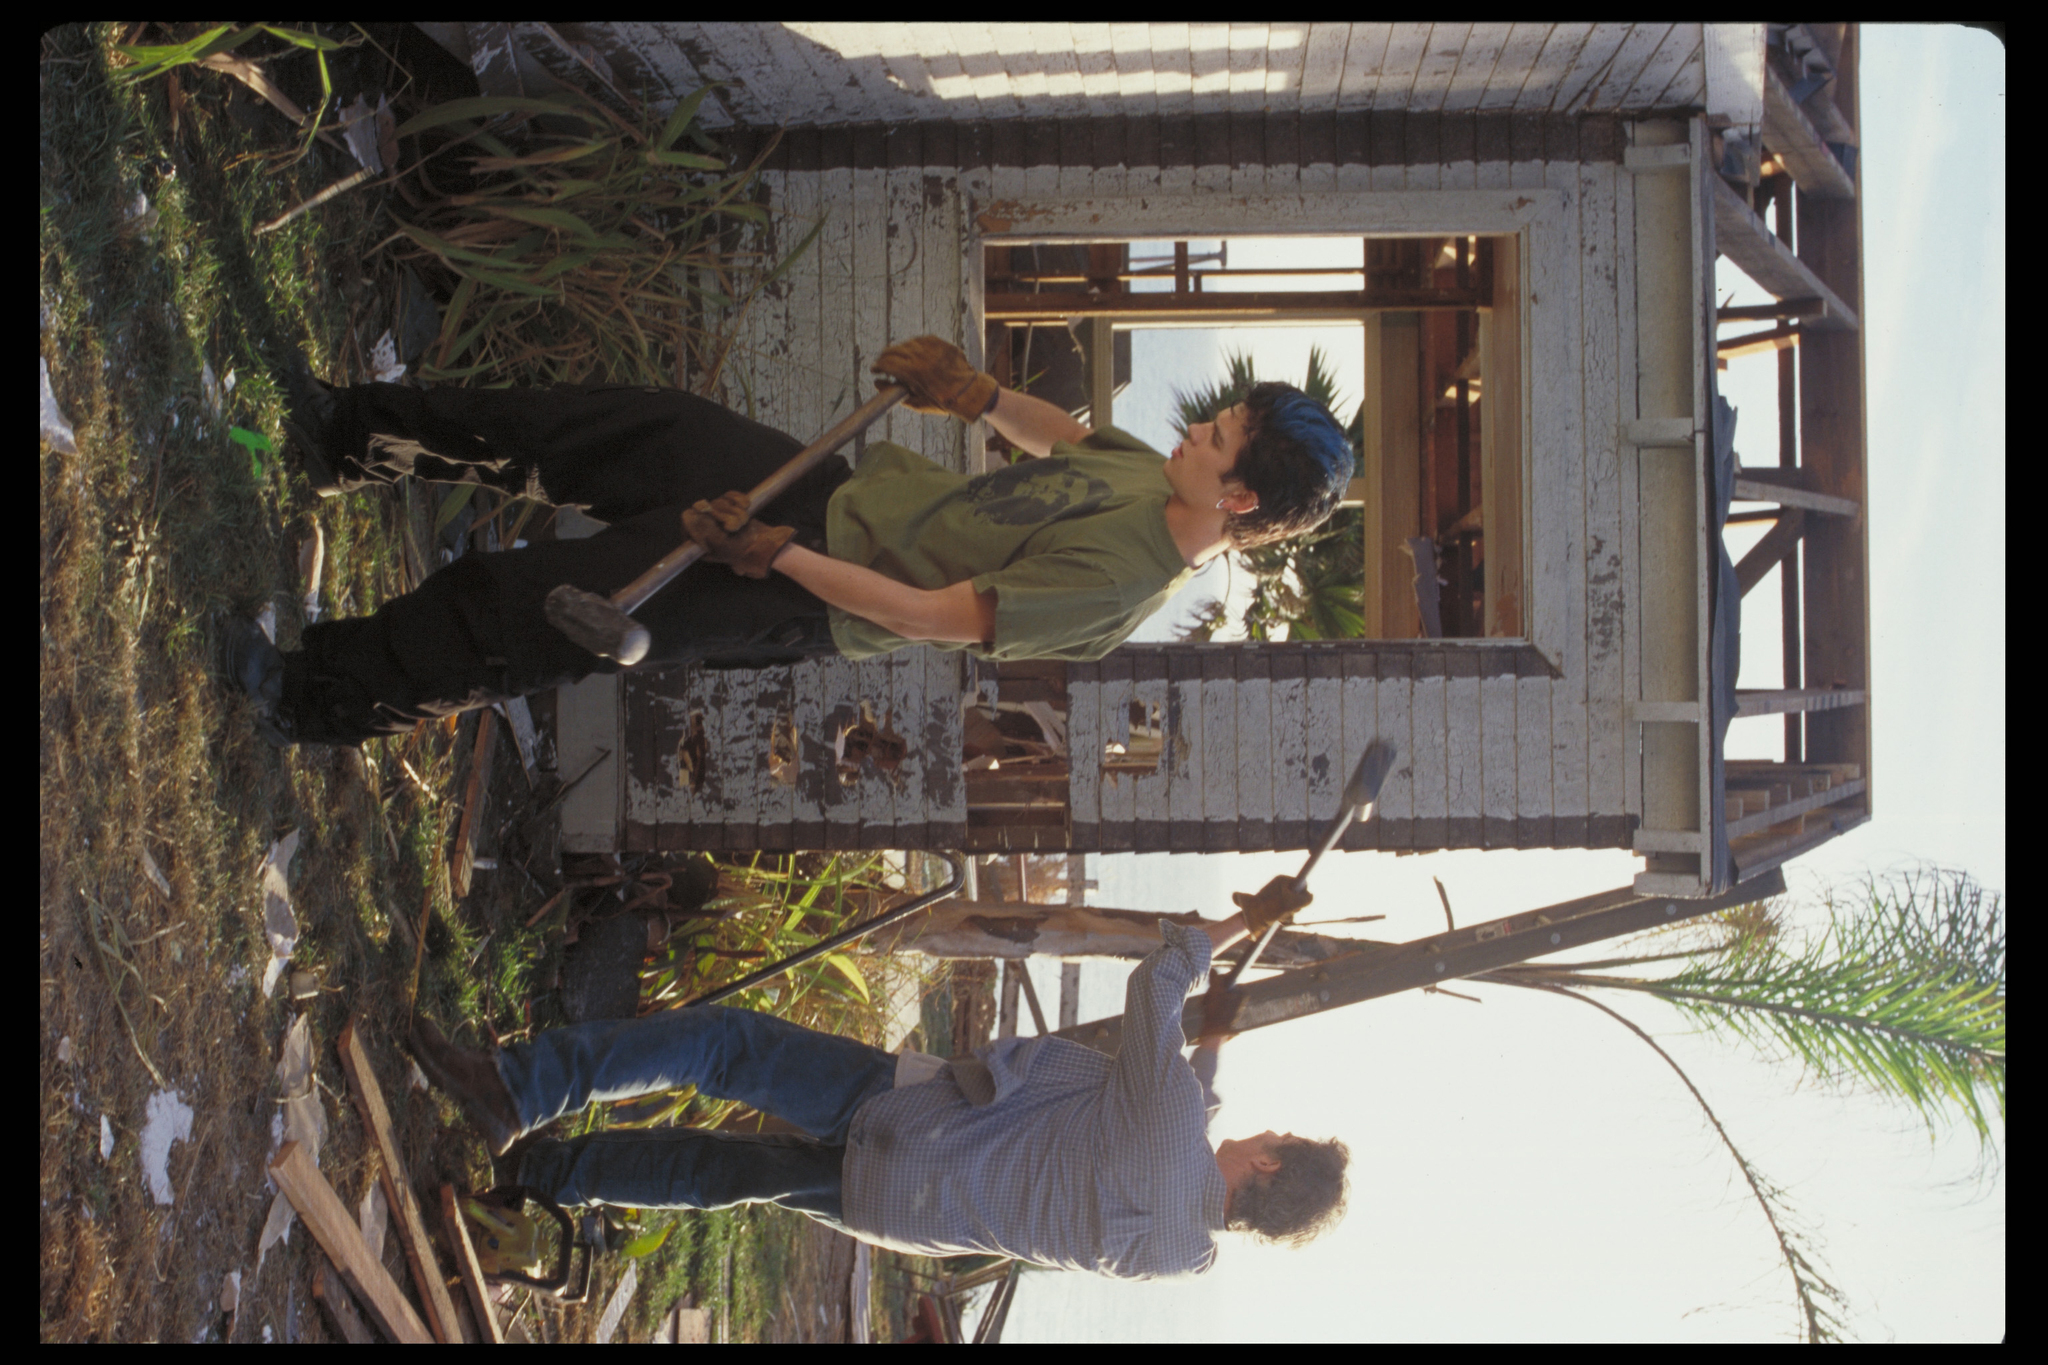 Still of Kevin Kline and Hayden Christensen in Life as a House (2001)